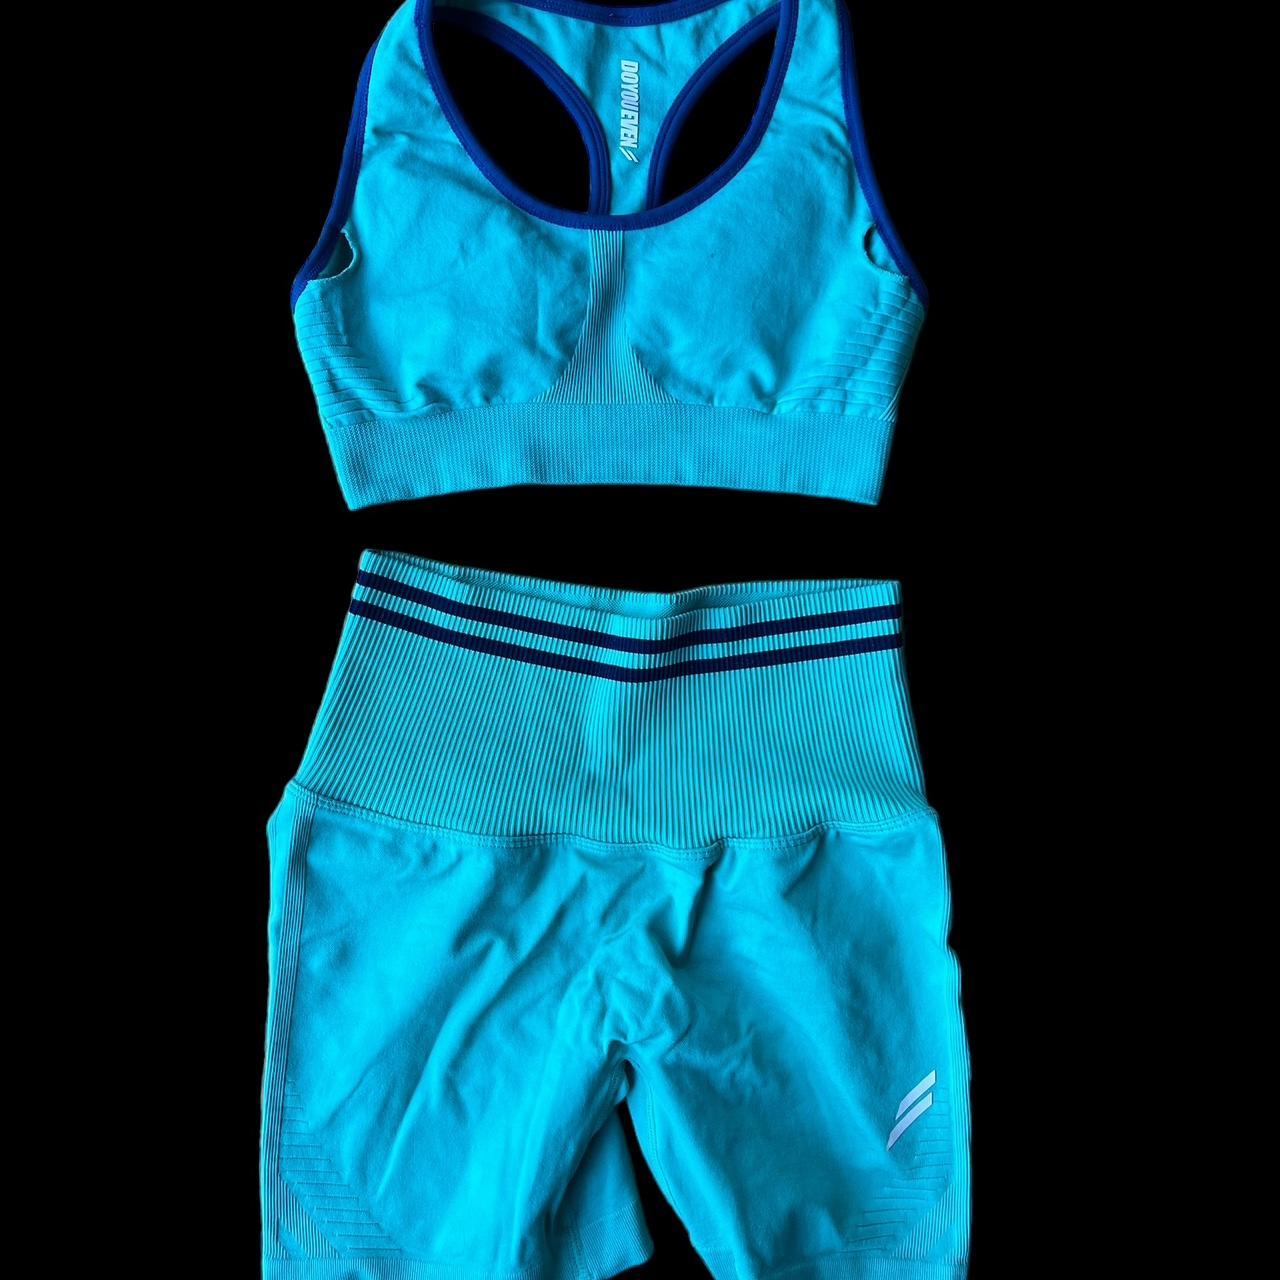 Do You Even blue workout set - scrunch shorts - size - Depop